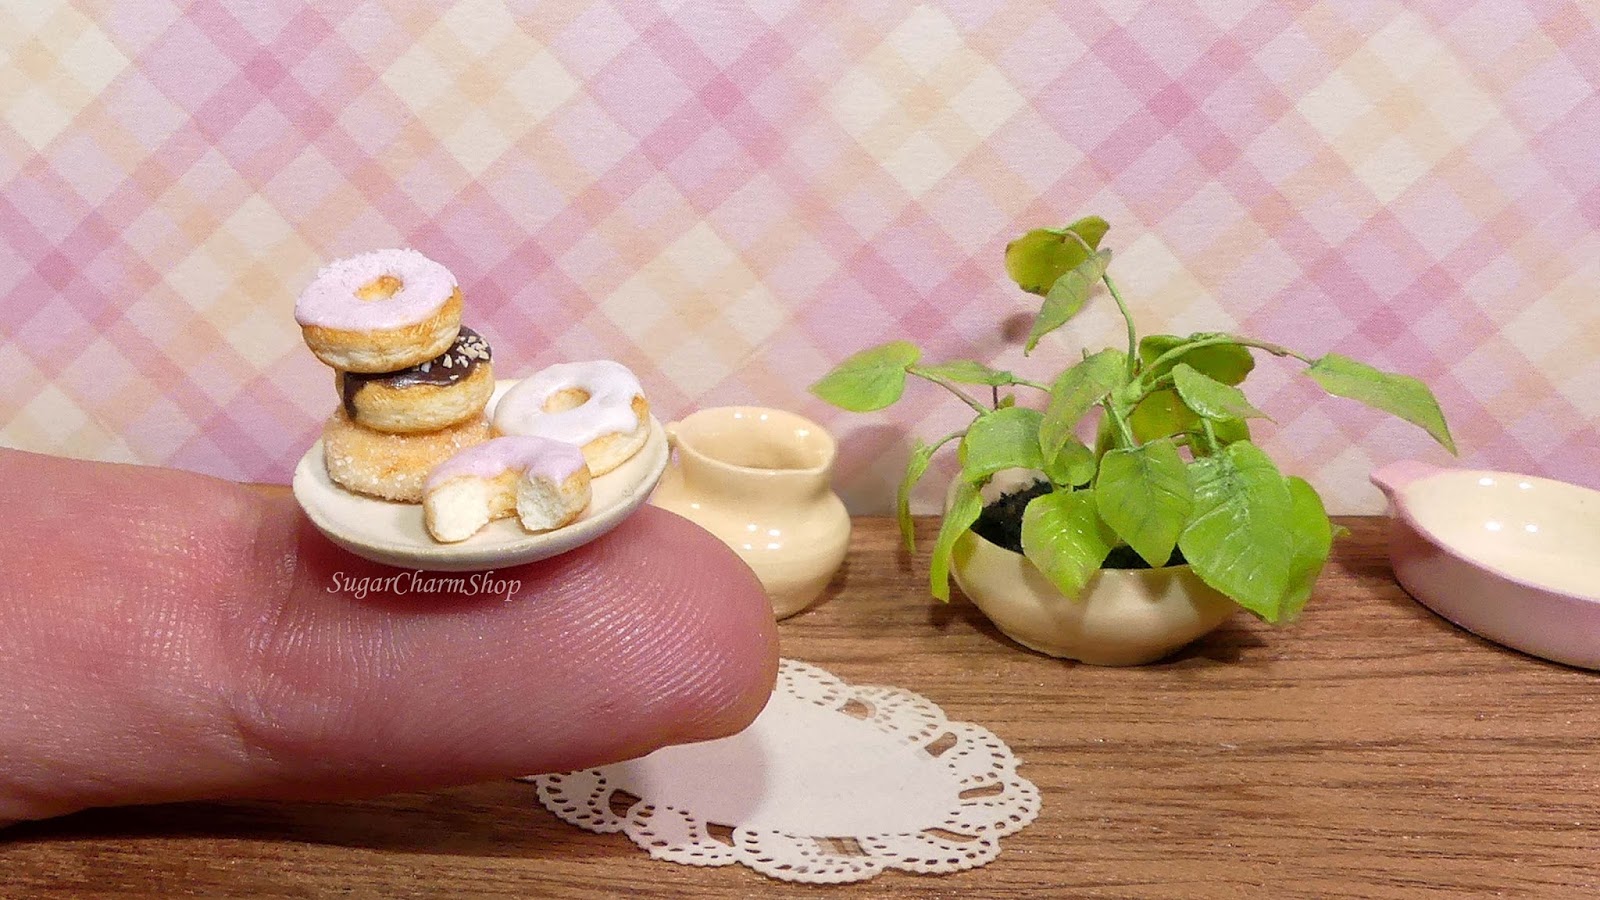 Tea Pastry Set Polymer Clay & Ceramic Glaze Miniature Dolls House